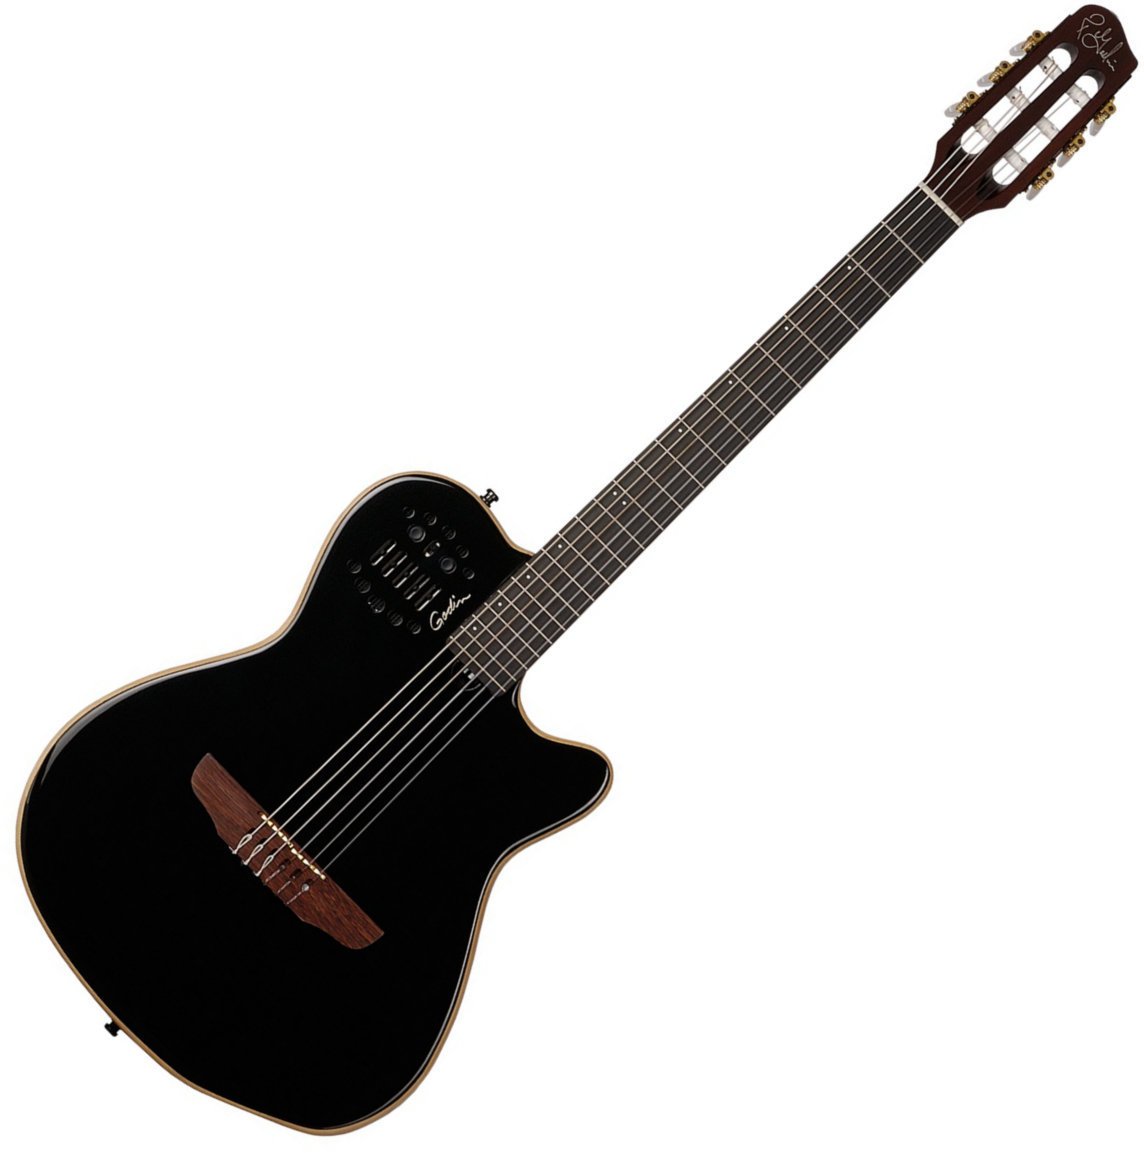 Speciell akustisk-elektrisk gitarr Godin Multiac ACS-SA Nylon Black Pearl HG